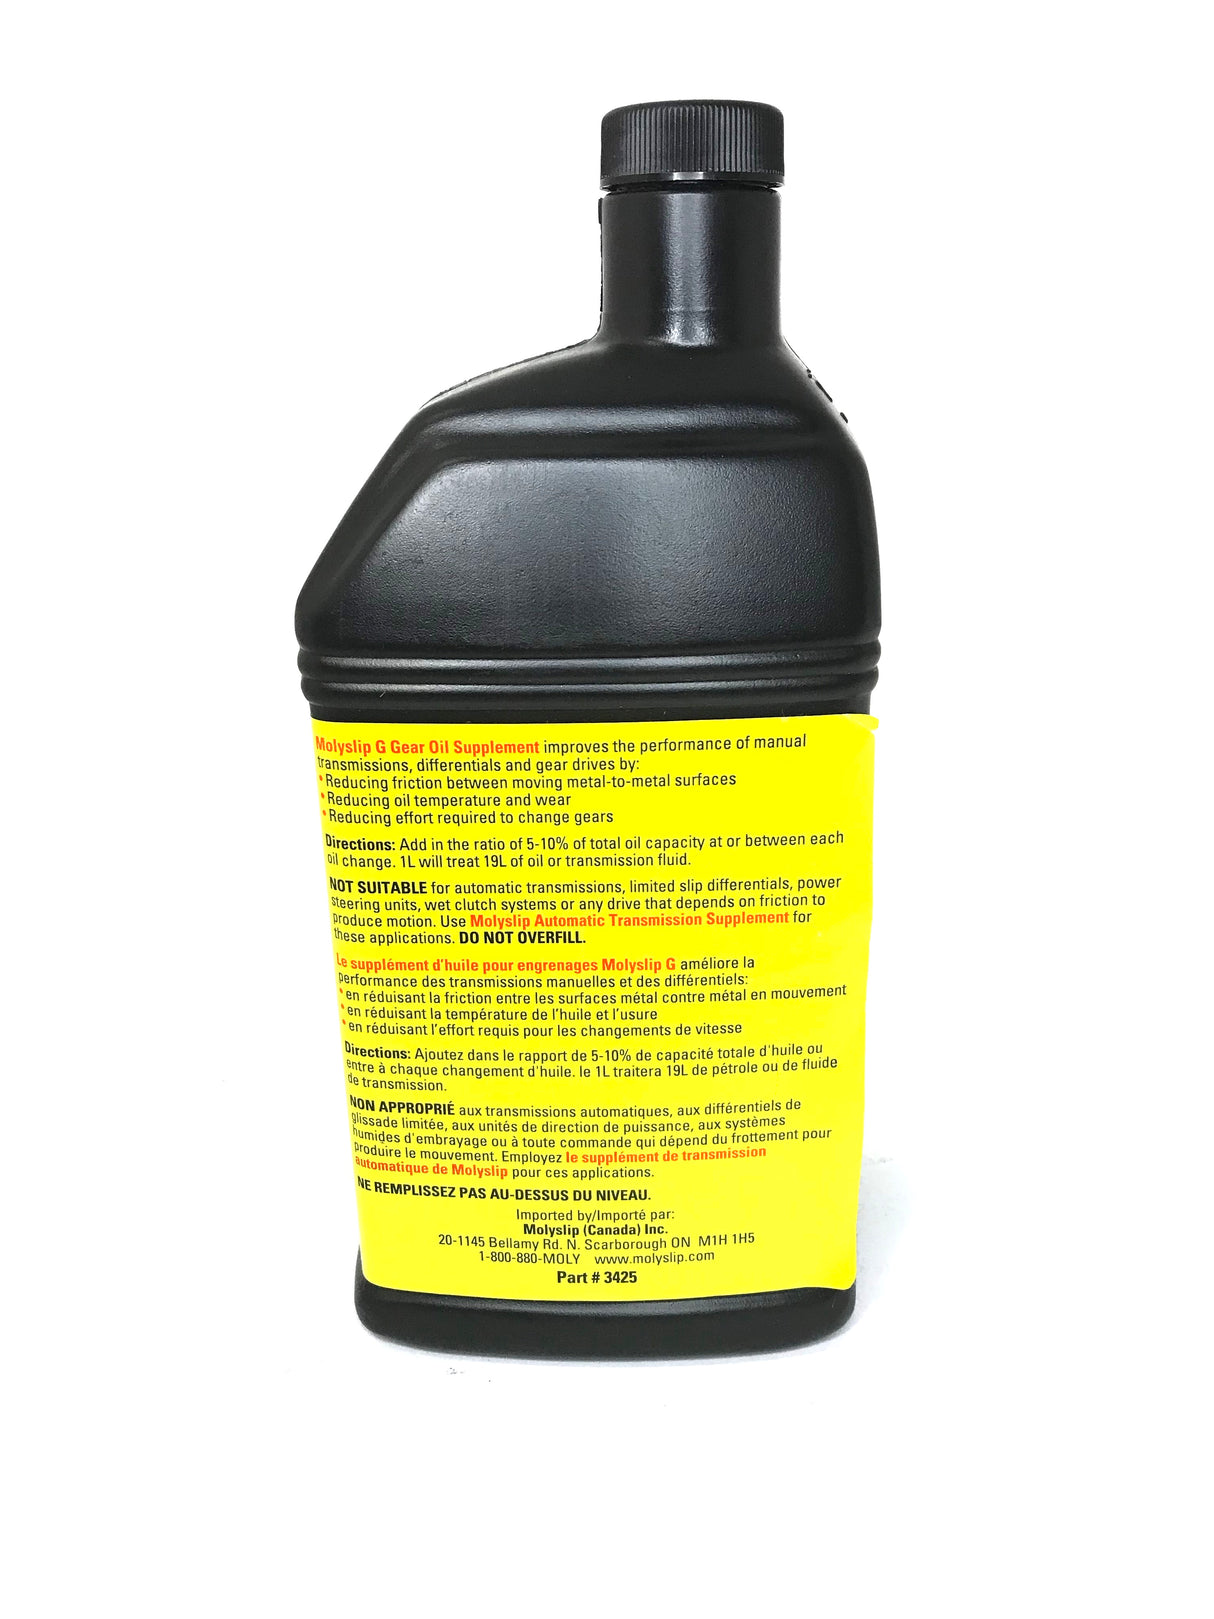 MLS 3425 Molyslip G Gear Oil Supplement - 1 liter - 2 PACK